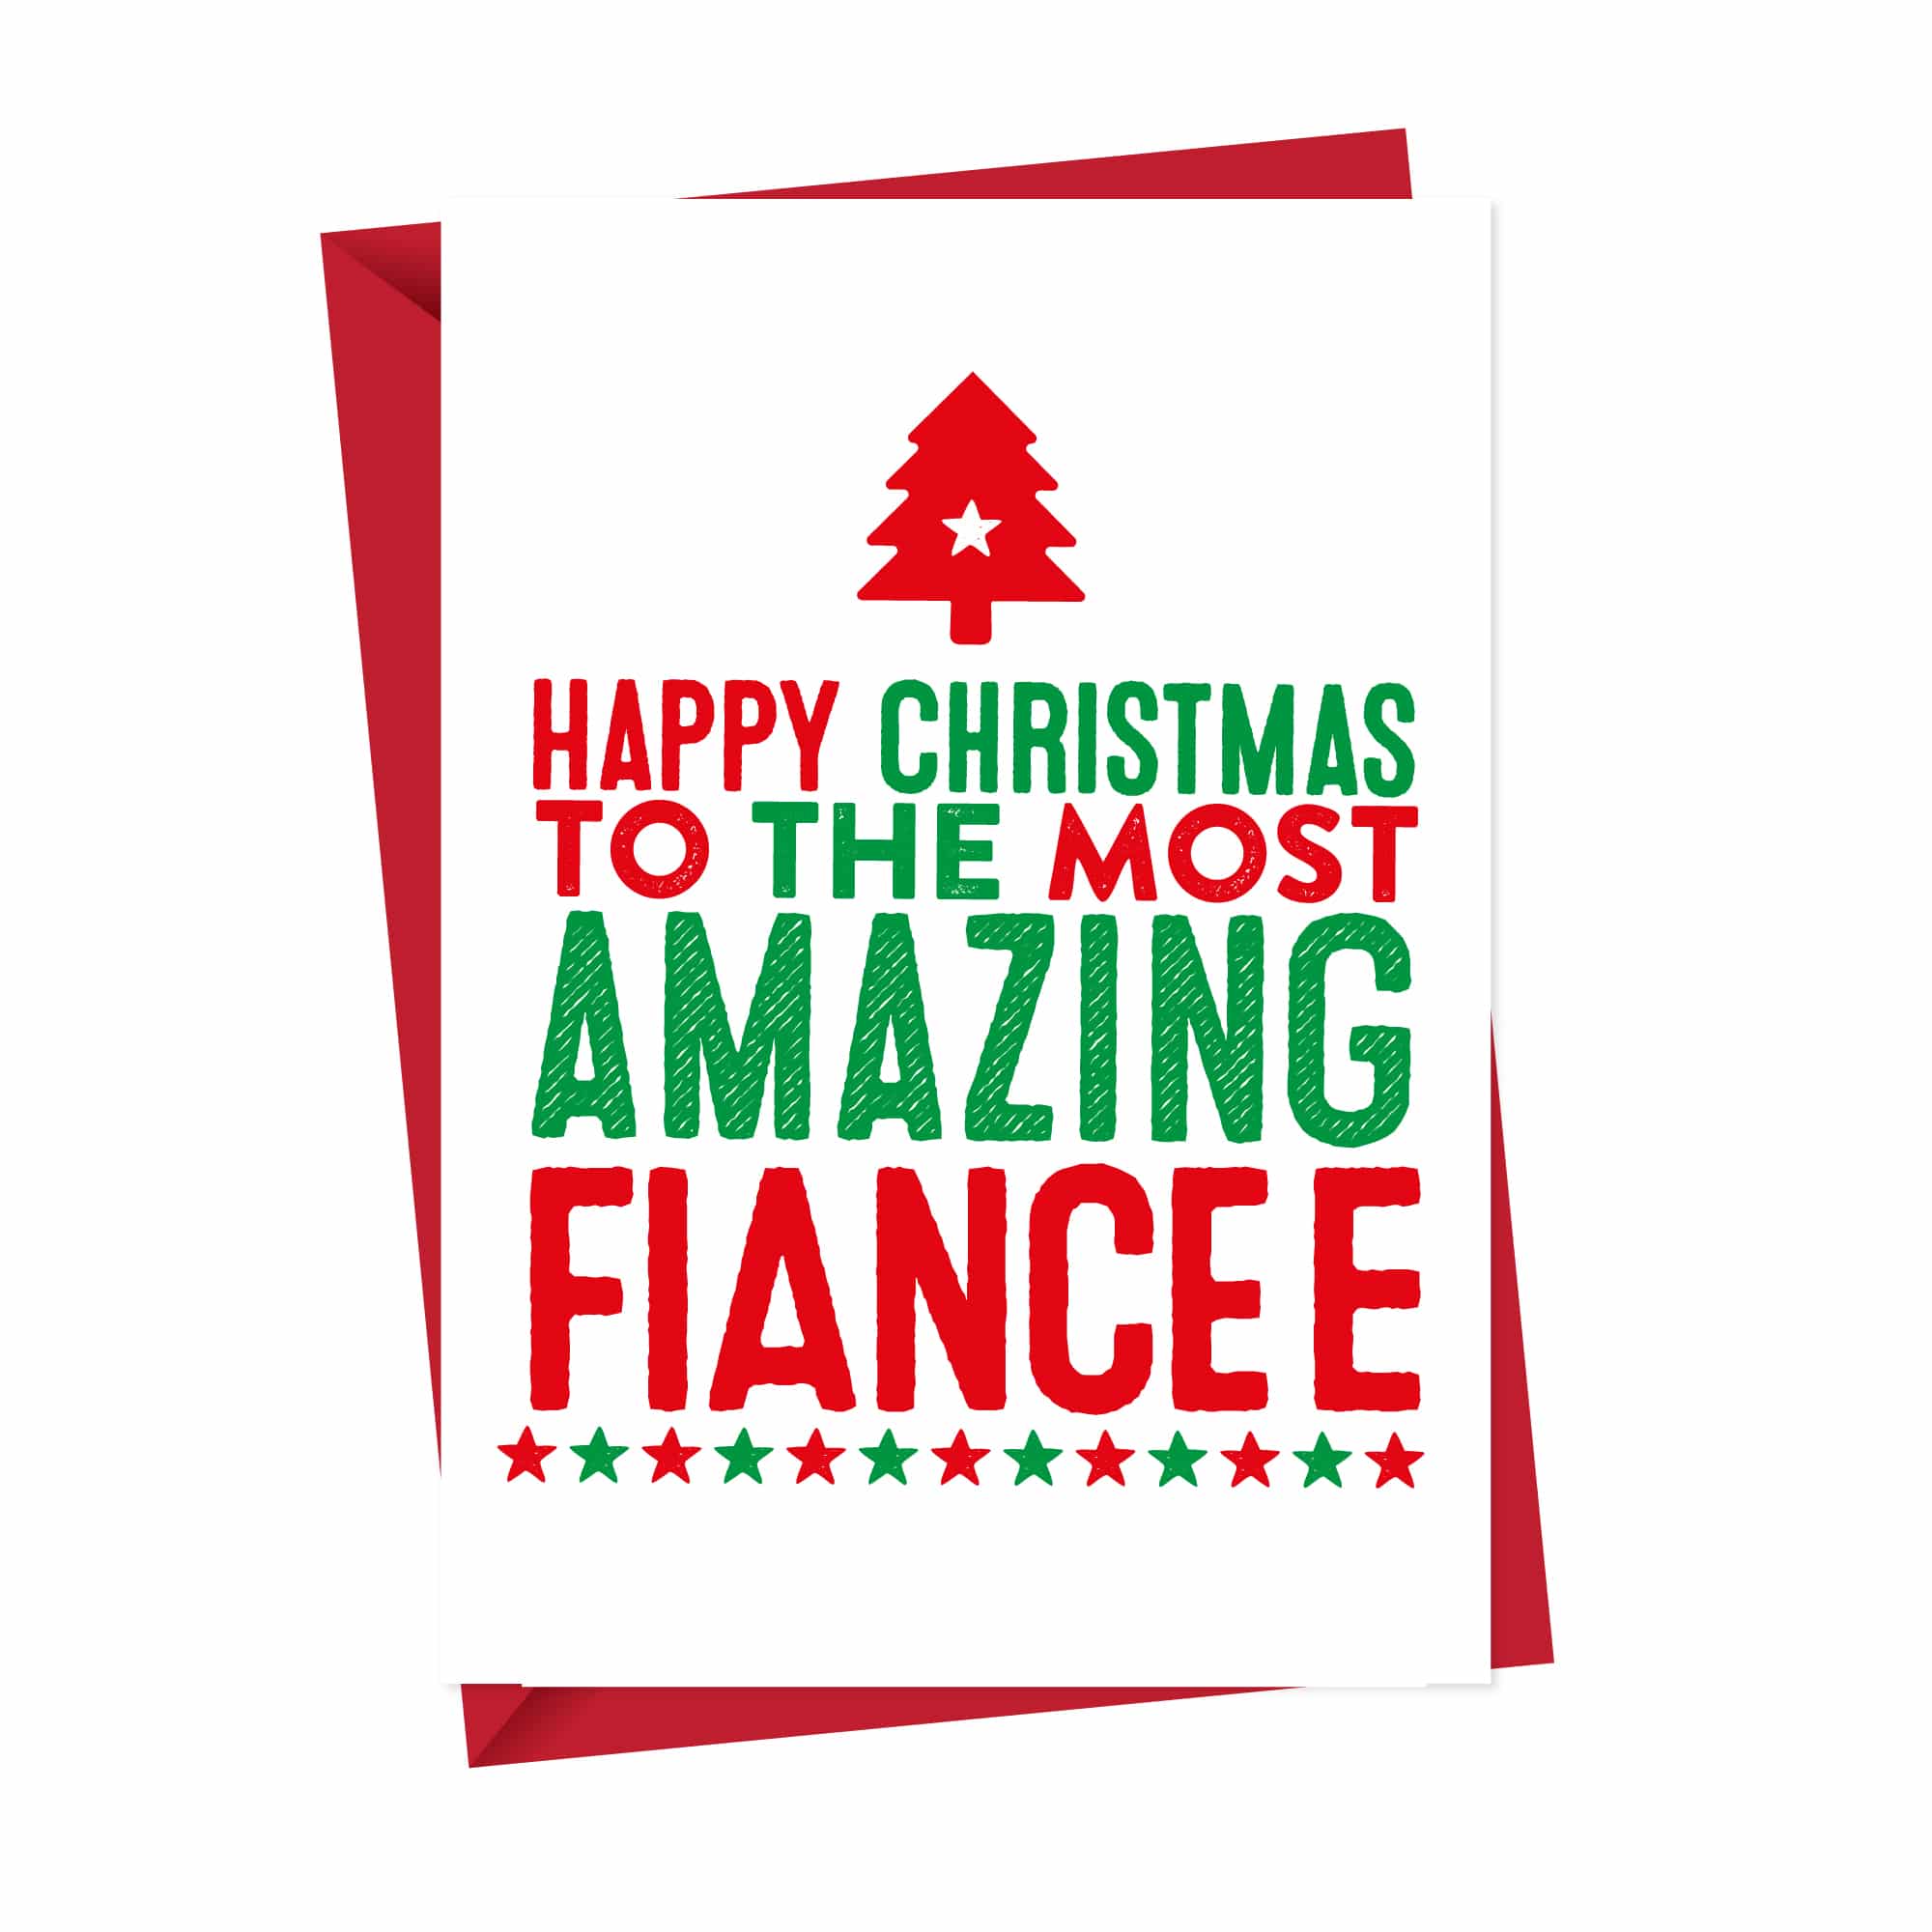 Amazing Fiancee Christmas Card